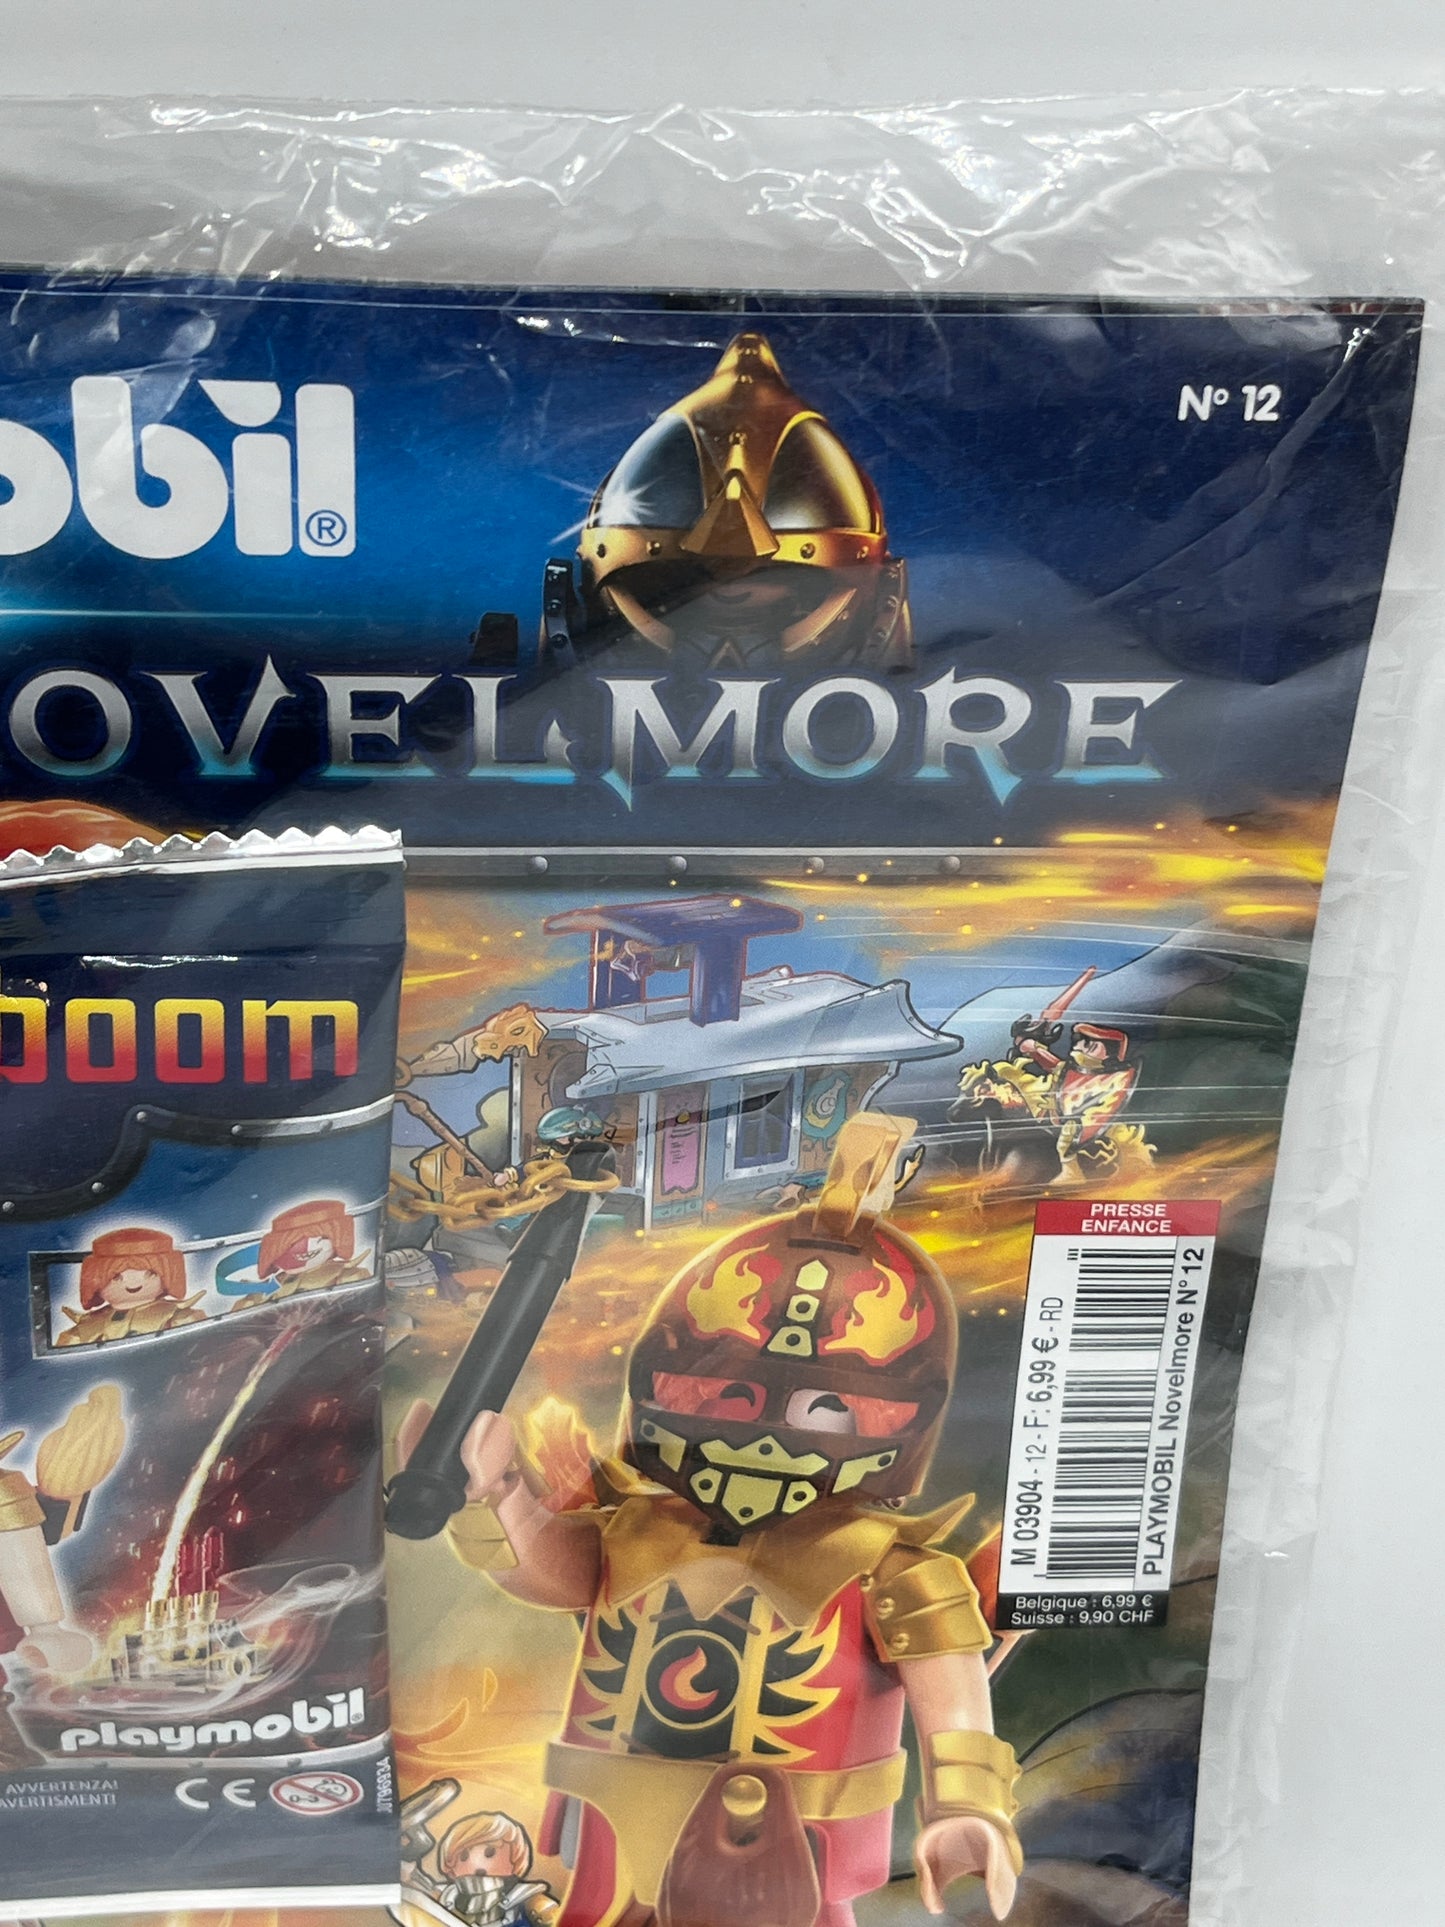 Livre D’activité magazine Playmobil Novelmore avec sa figurine chevalier Kahboumjamais ouvert Neuf